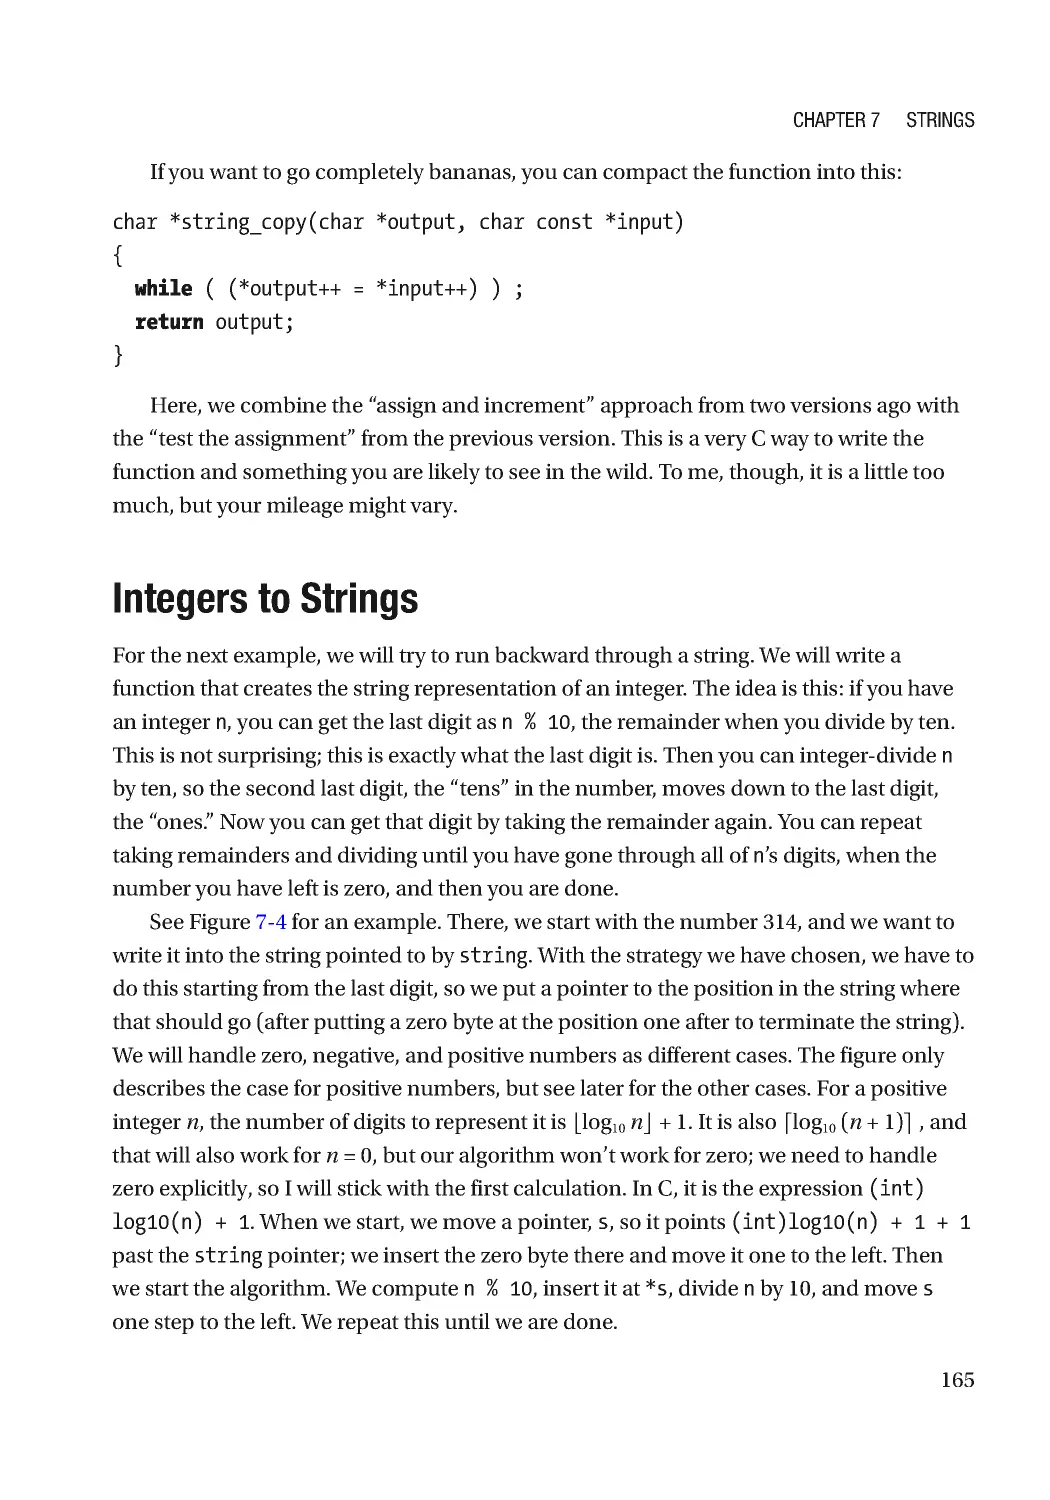 Integers to Strings